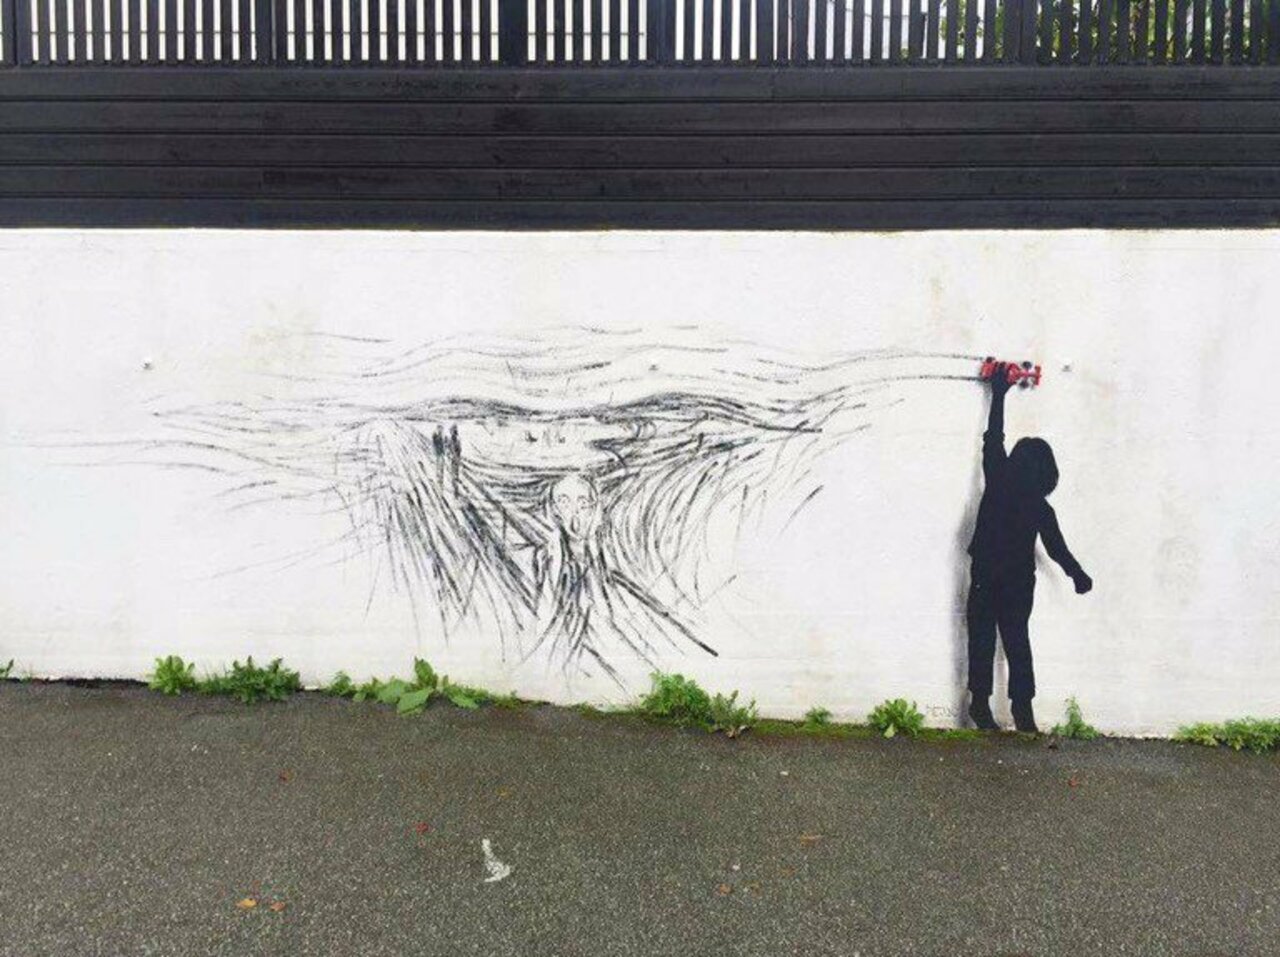 Playing is an #Art - #Creative #StreetArt by @Pejac_art#munch #raw #kid #explore #urbanart http://beartistbeart.com/2016/09/12/playing-is-an-art-creative-streetart-by-pejac_art https://t.co/0FzIG12x3k